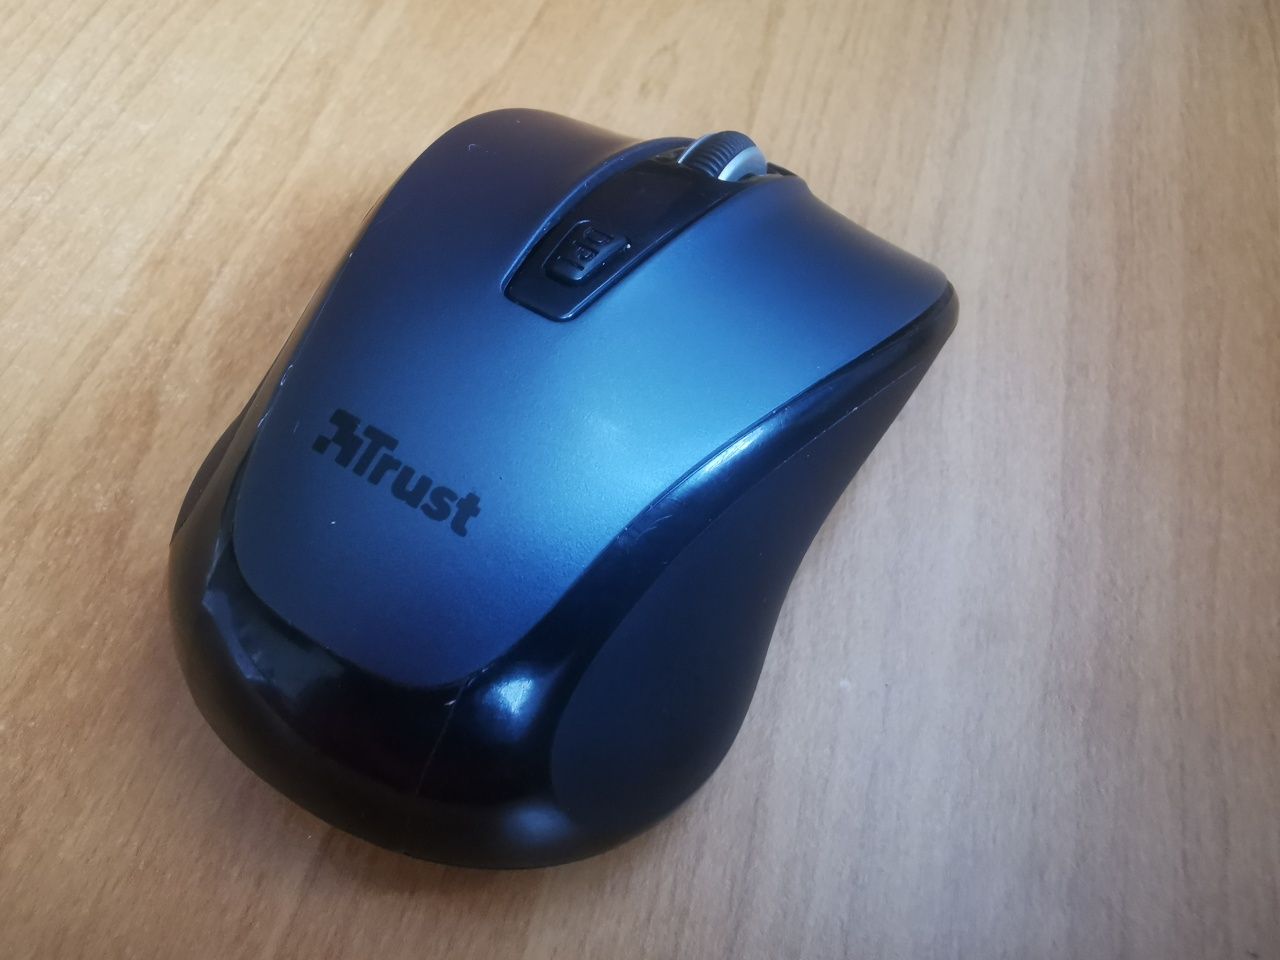 Mouse wireless Trust Siero, silentios